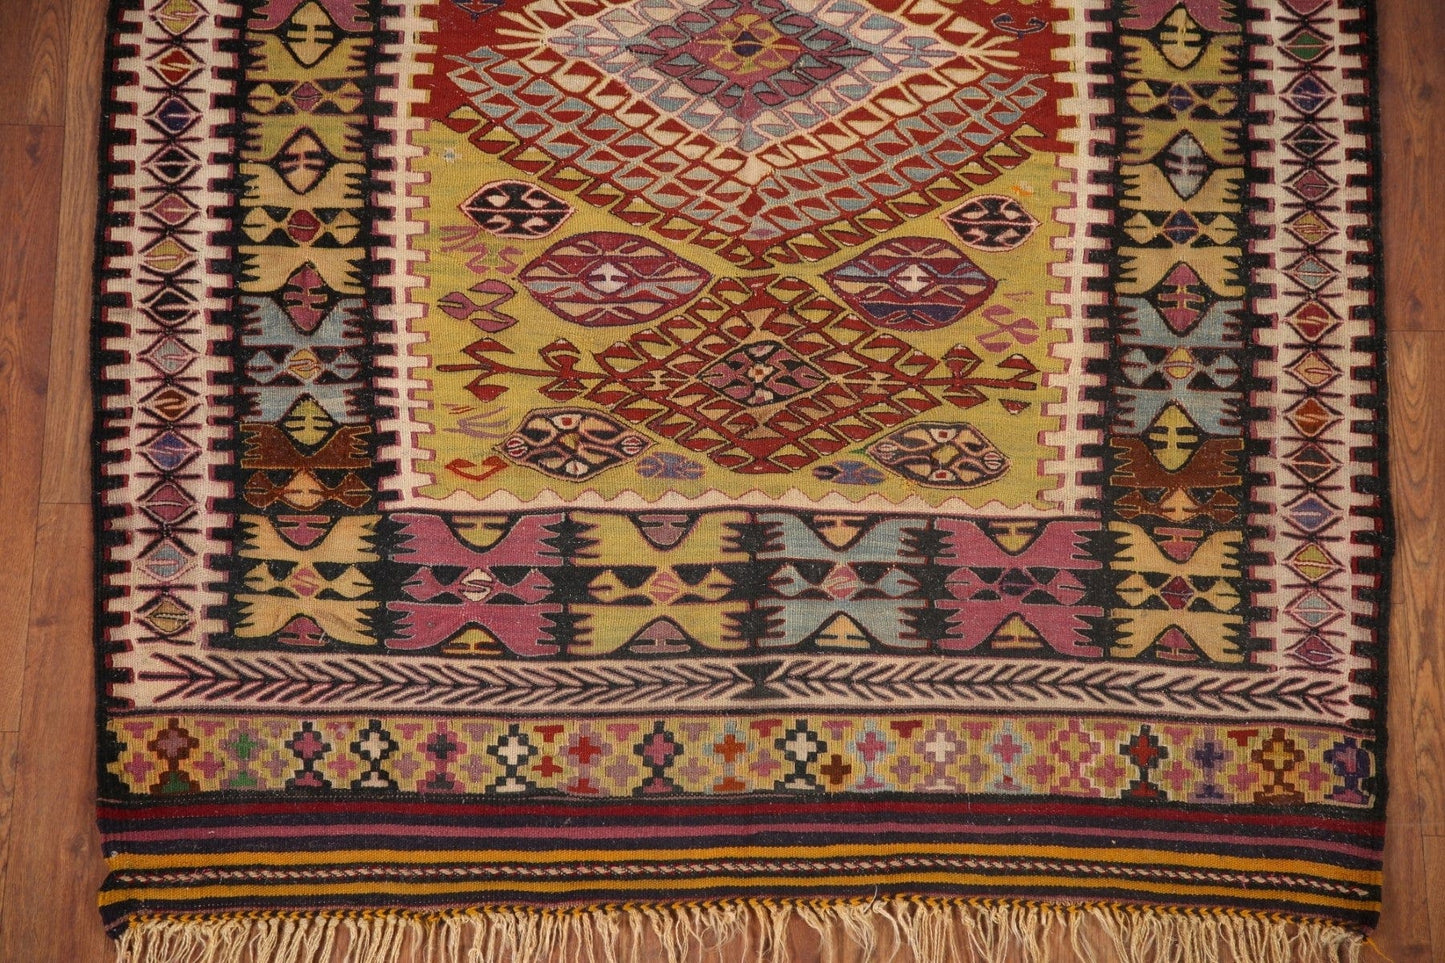 Vegetable Dye Senneh Antique Persian Area Rug 4x5